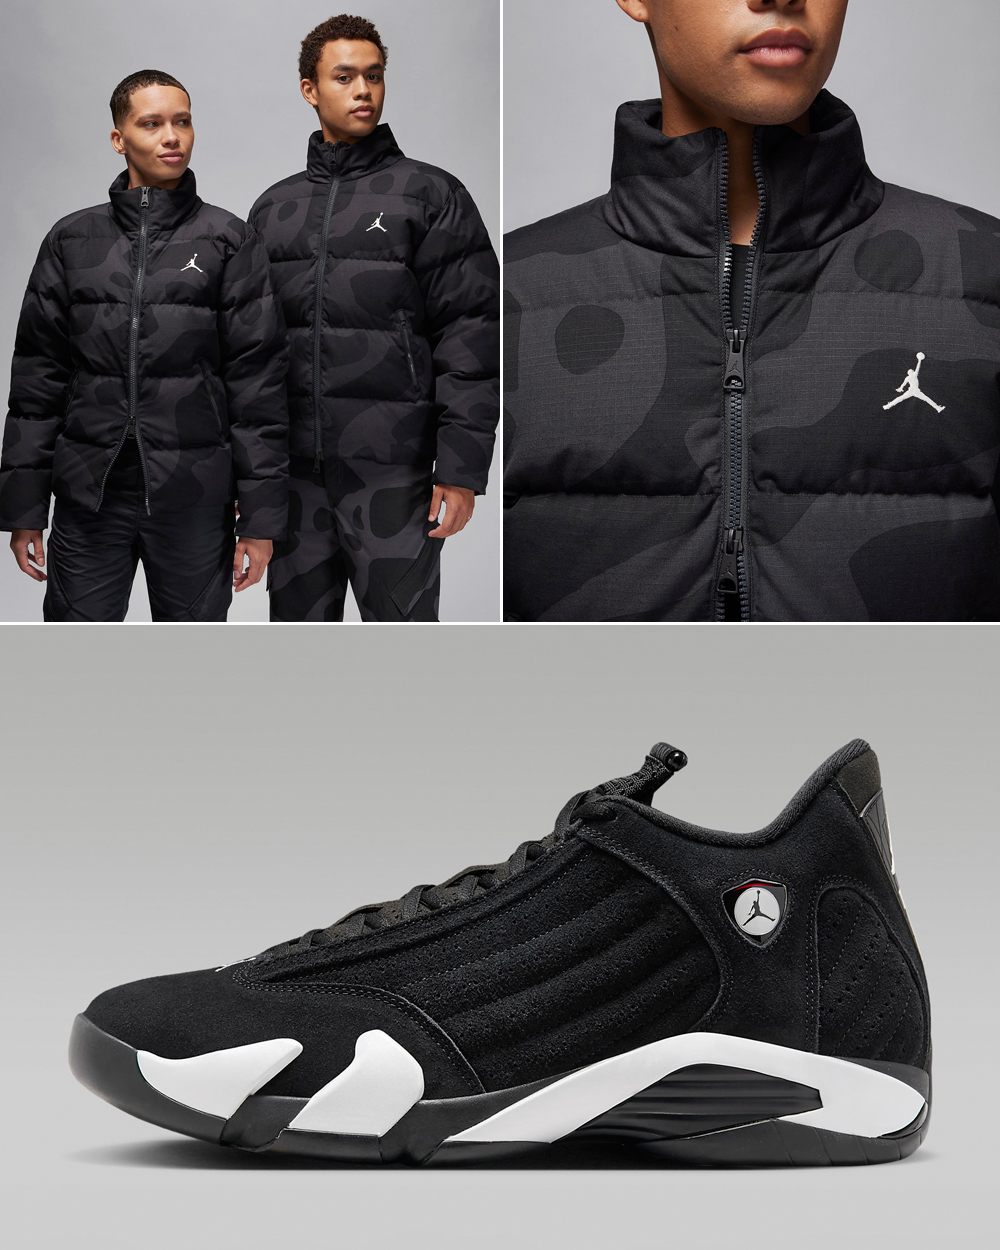 Air-Jordan-14-Black-White-Winter-Jacket-Outfit